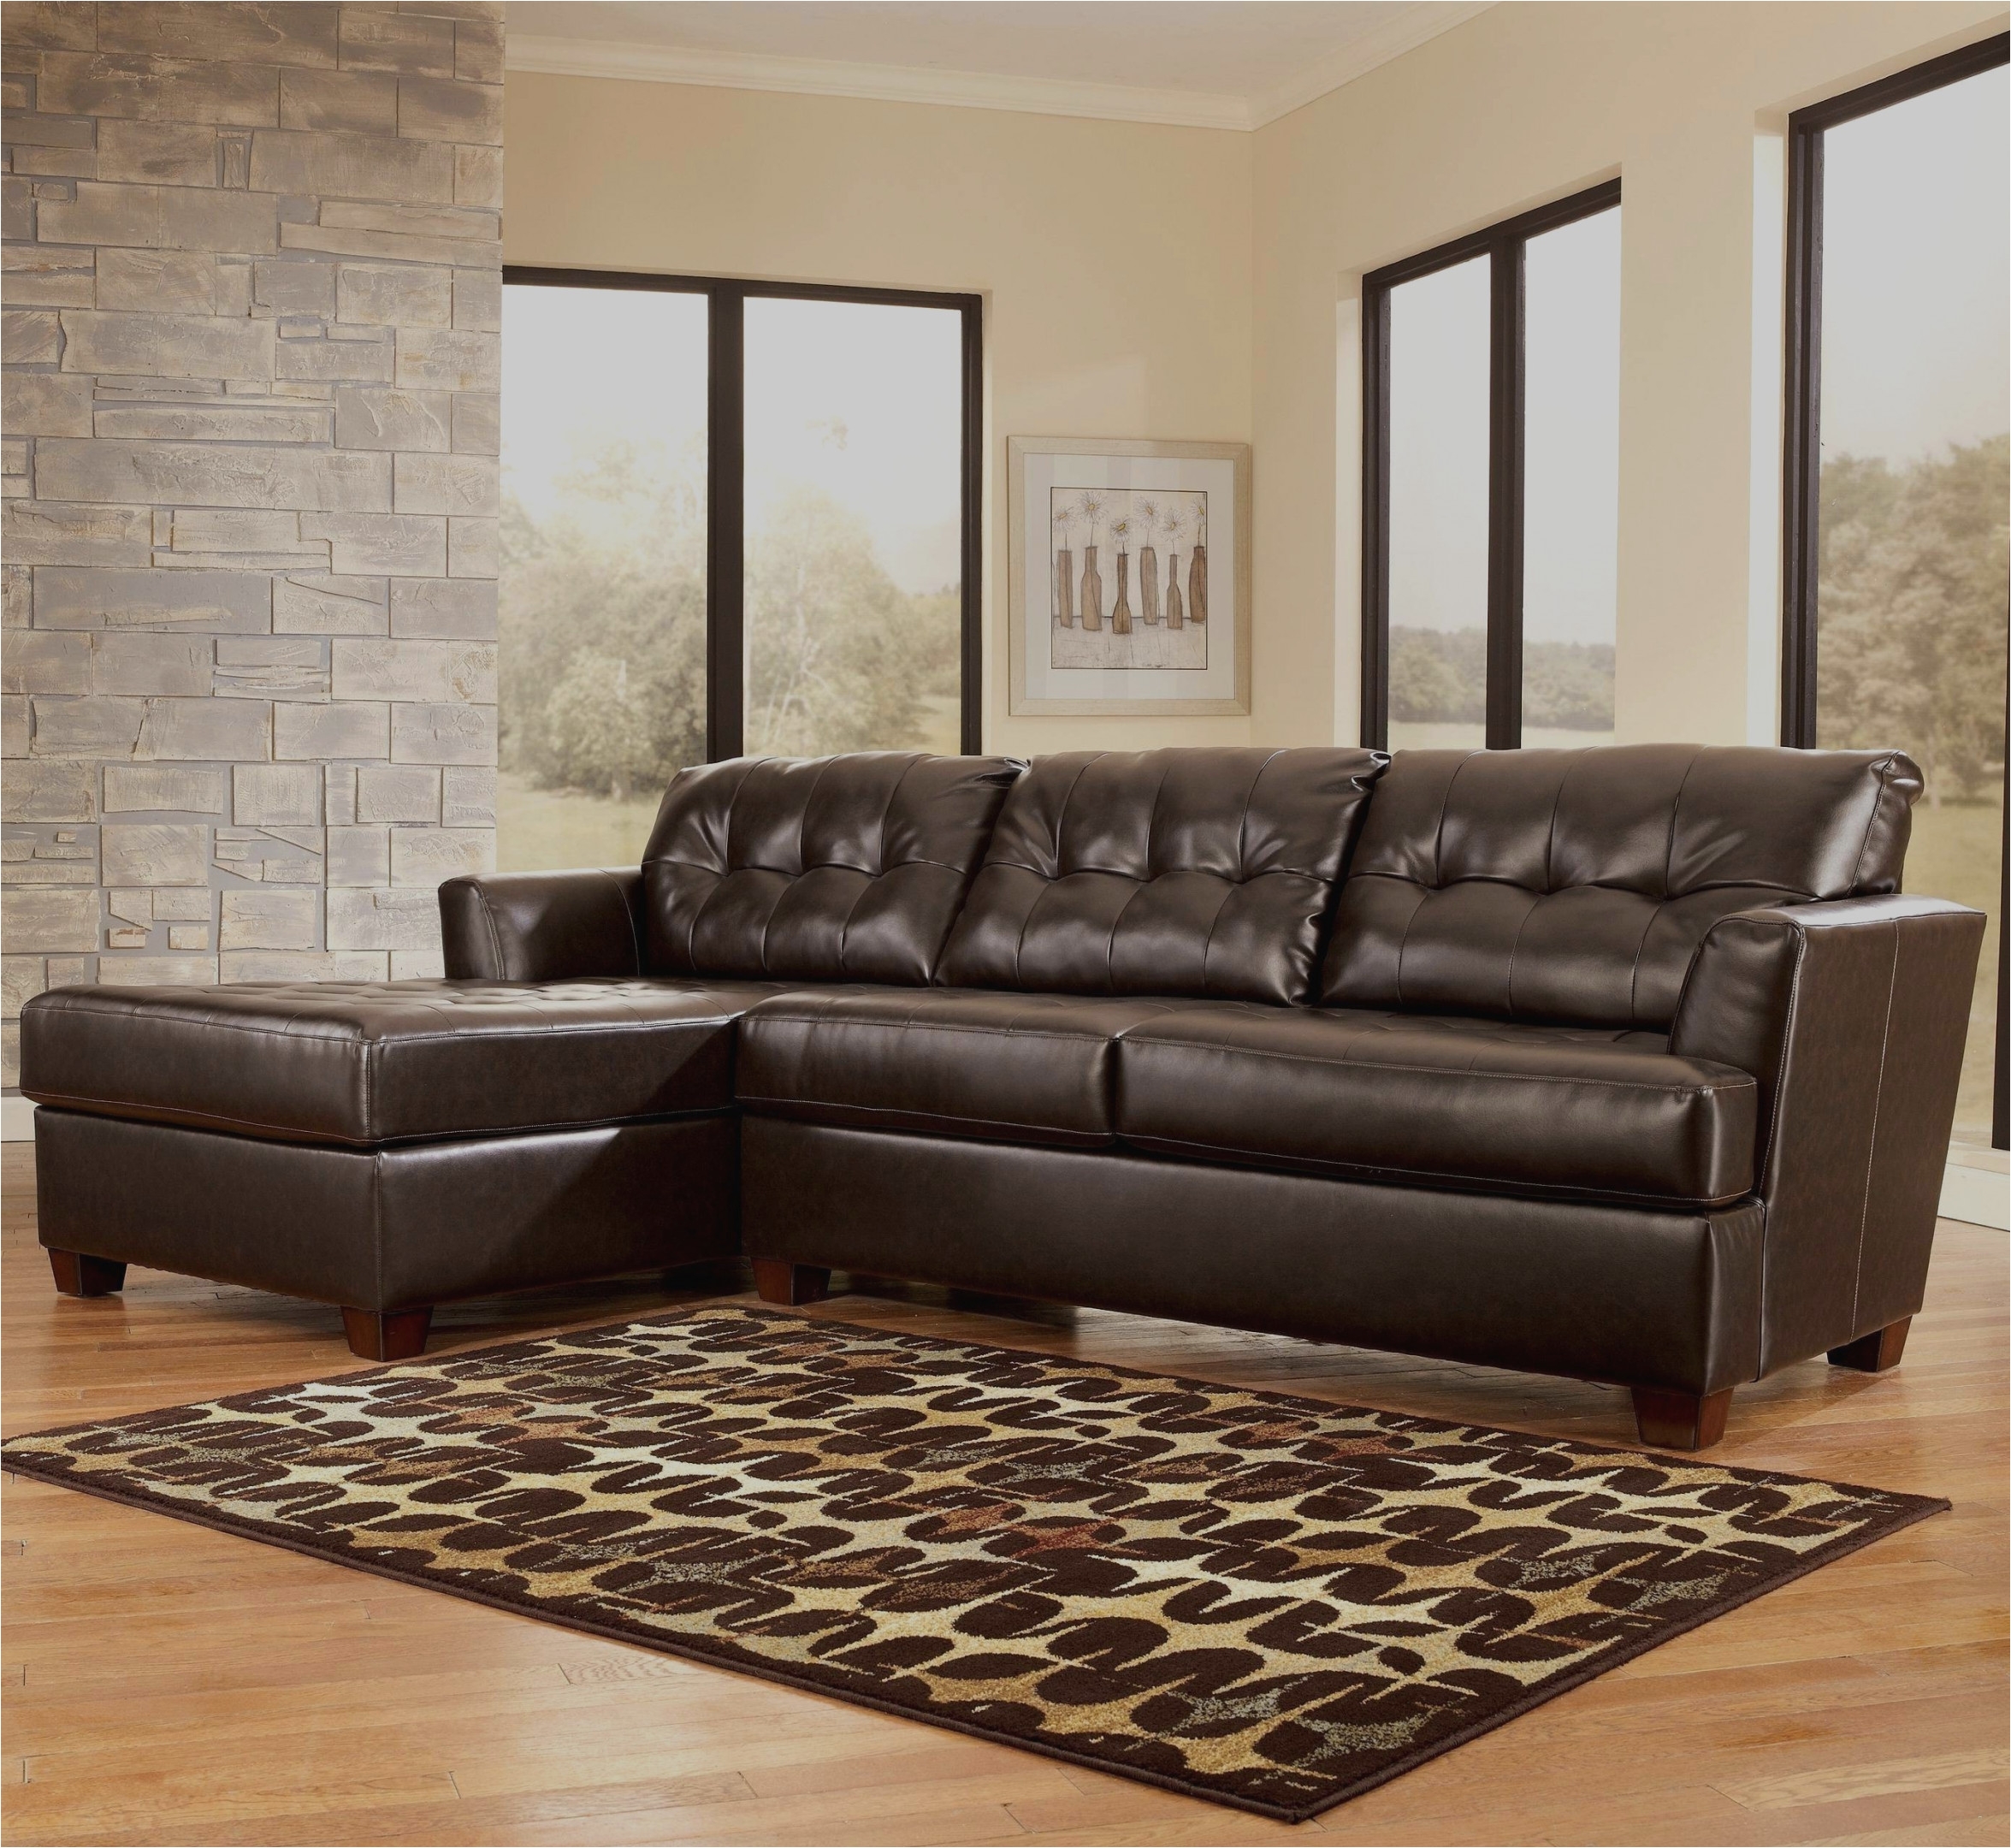 Ashley Furniture Living Room Furniture Best 26 Fresh 3 Piece Leather Sofa Set Fresh Home